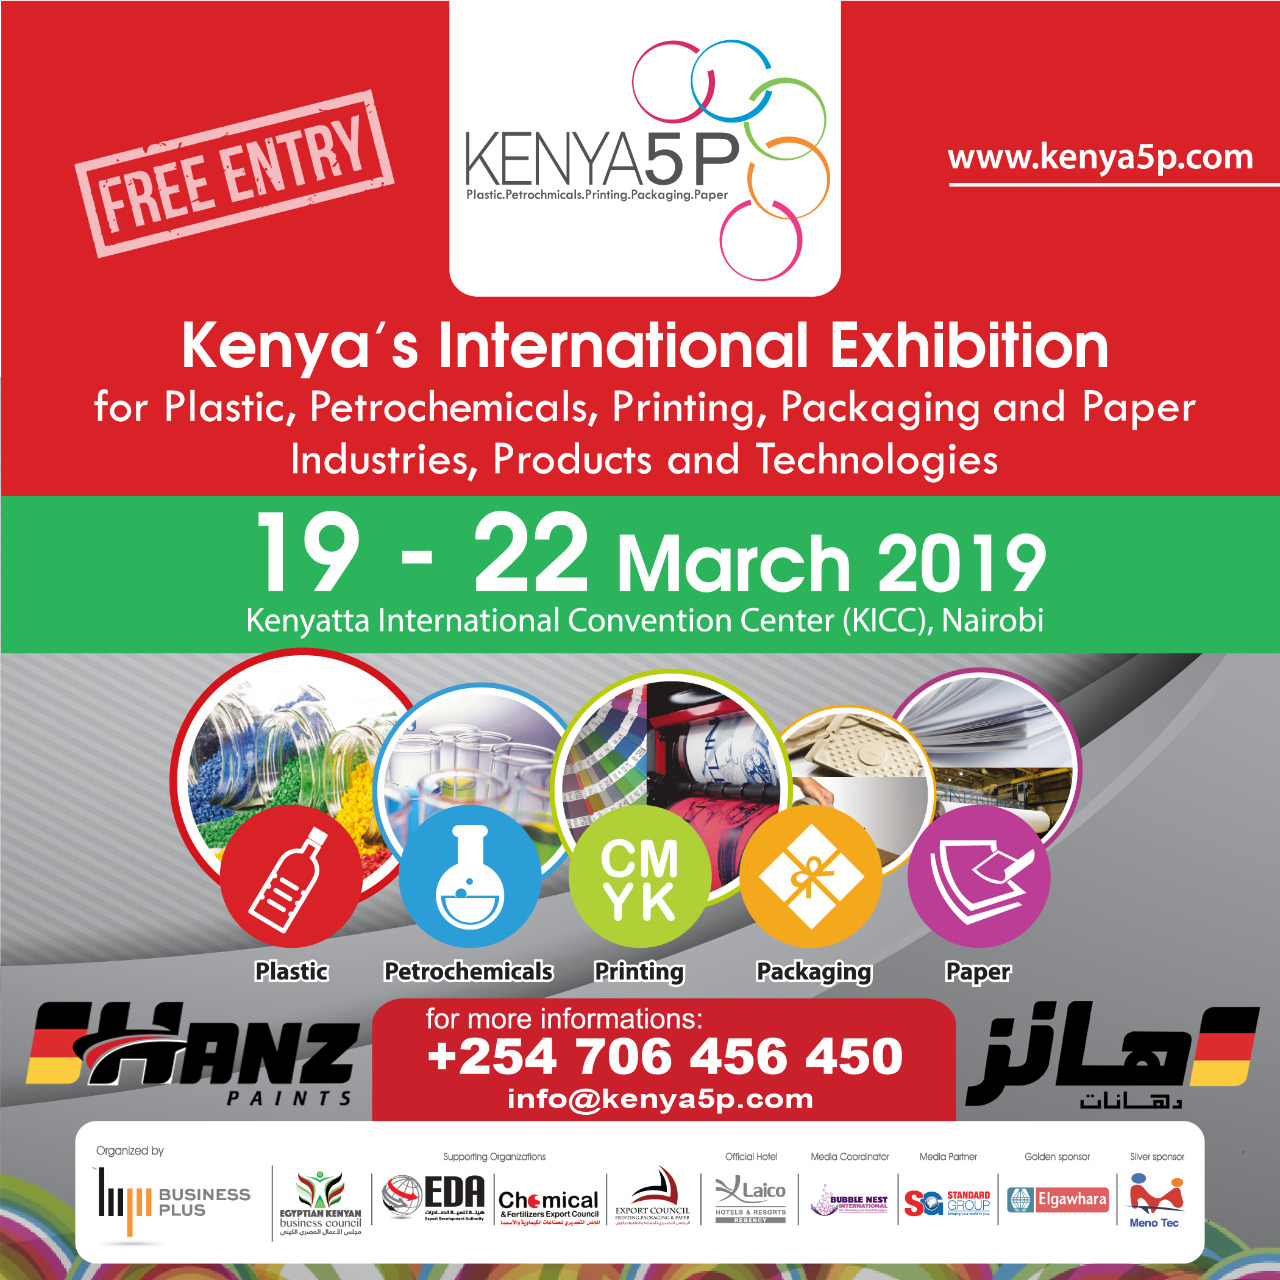 Kenya's International Exhibition